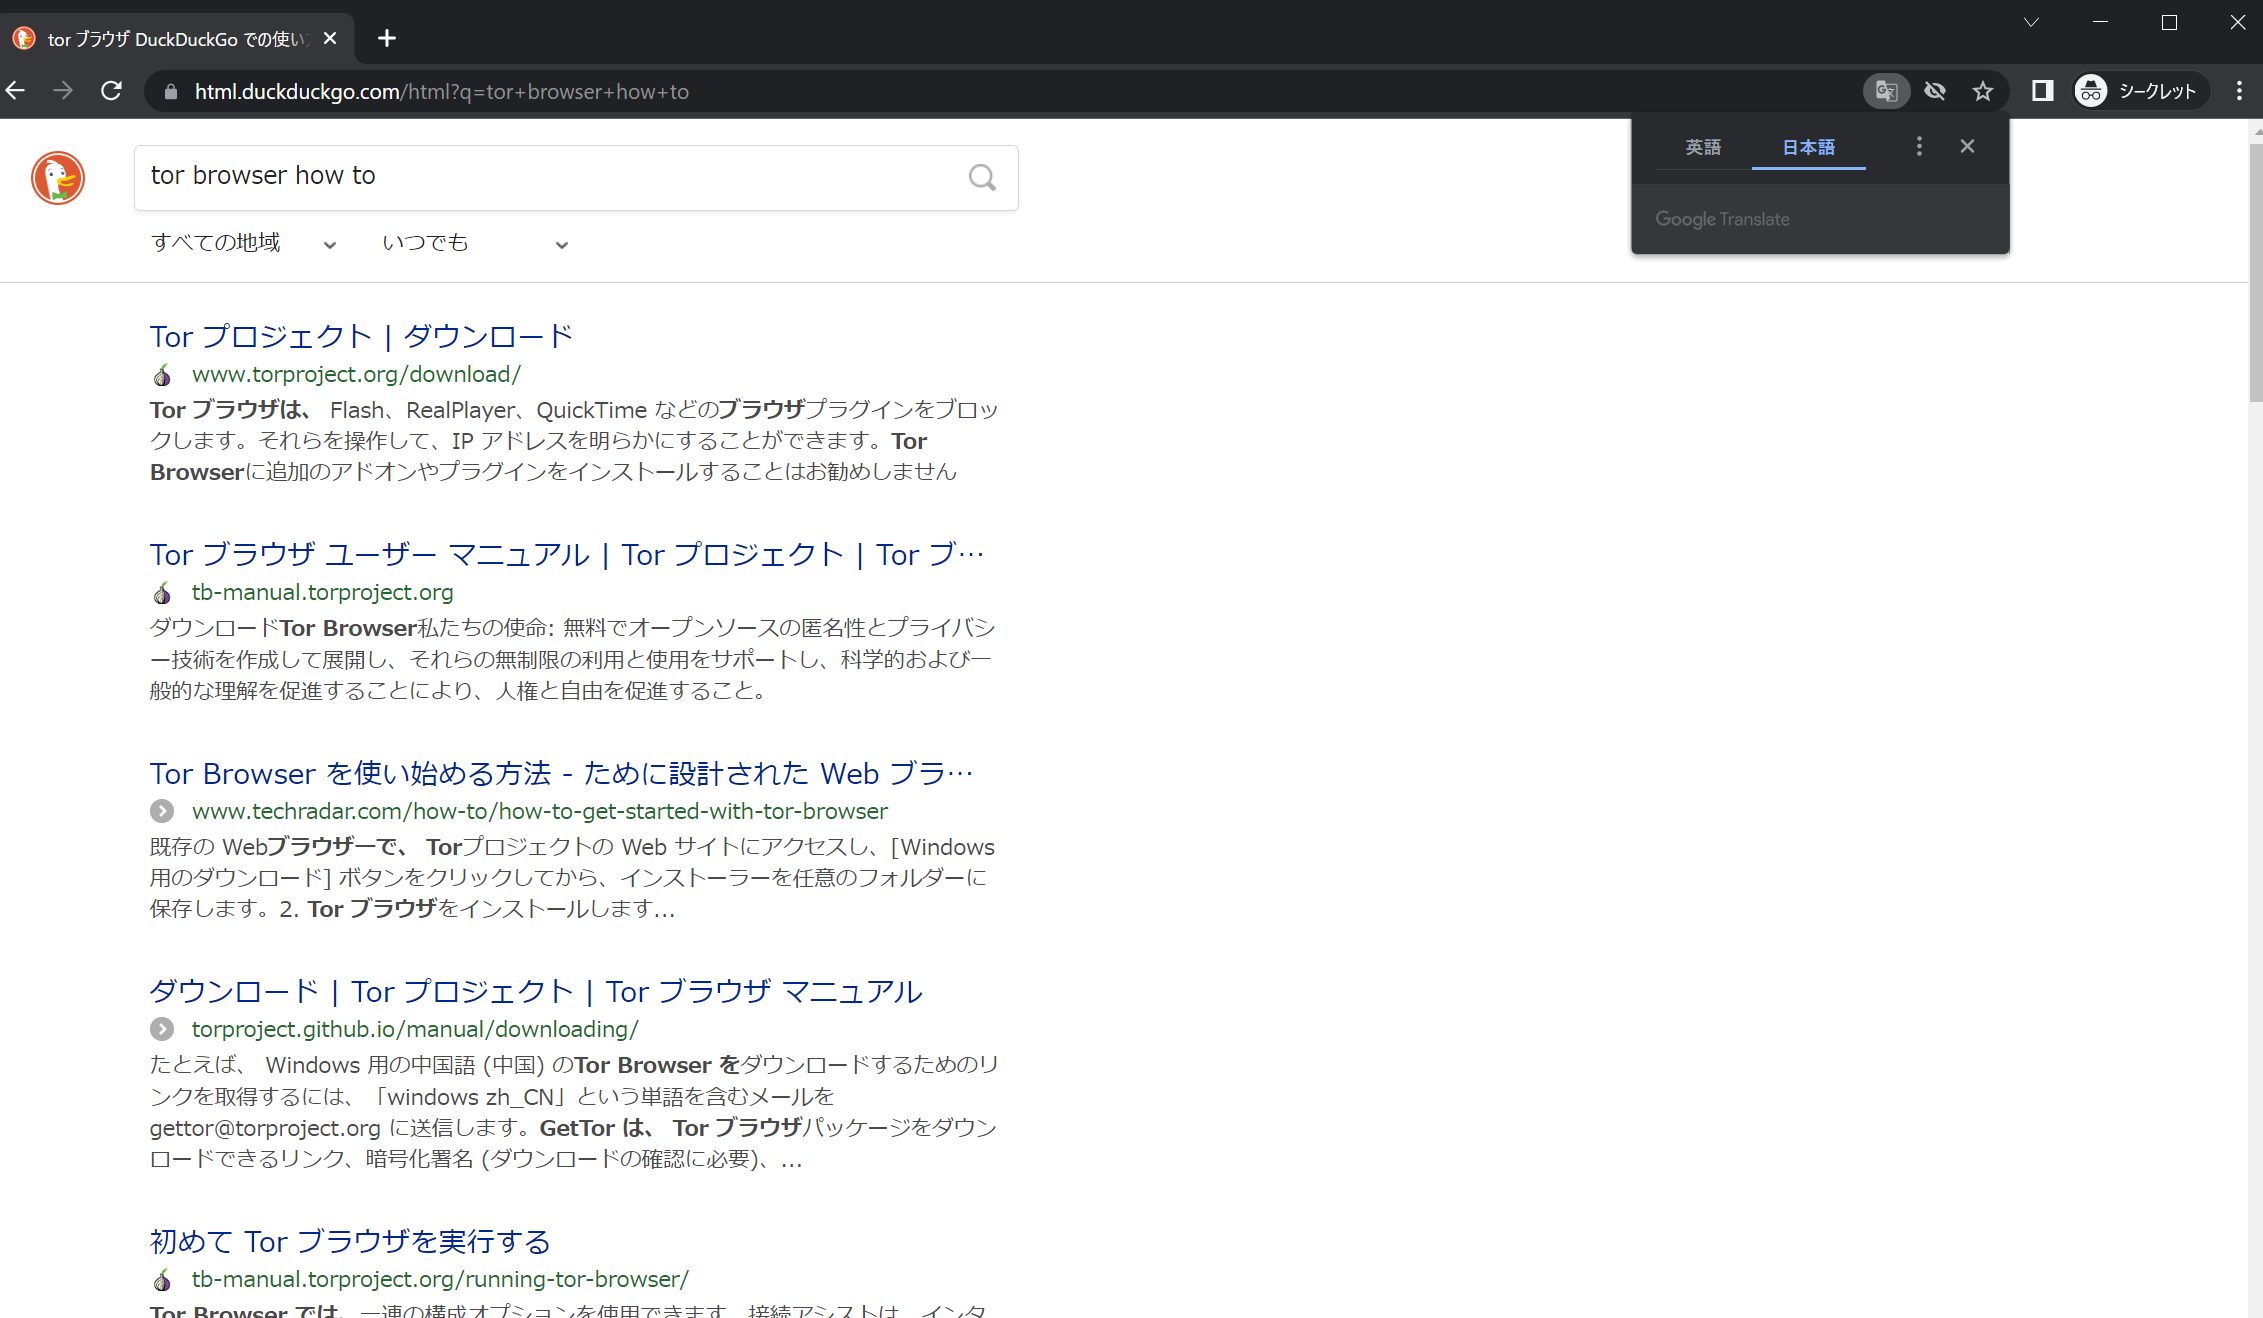 duckduckgo.comという怪しい検索エンジン（日本語訳にしてみる）